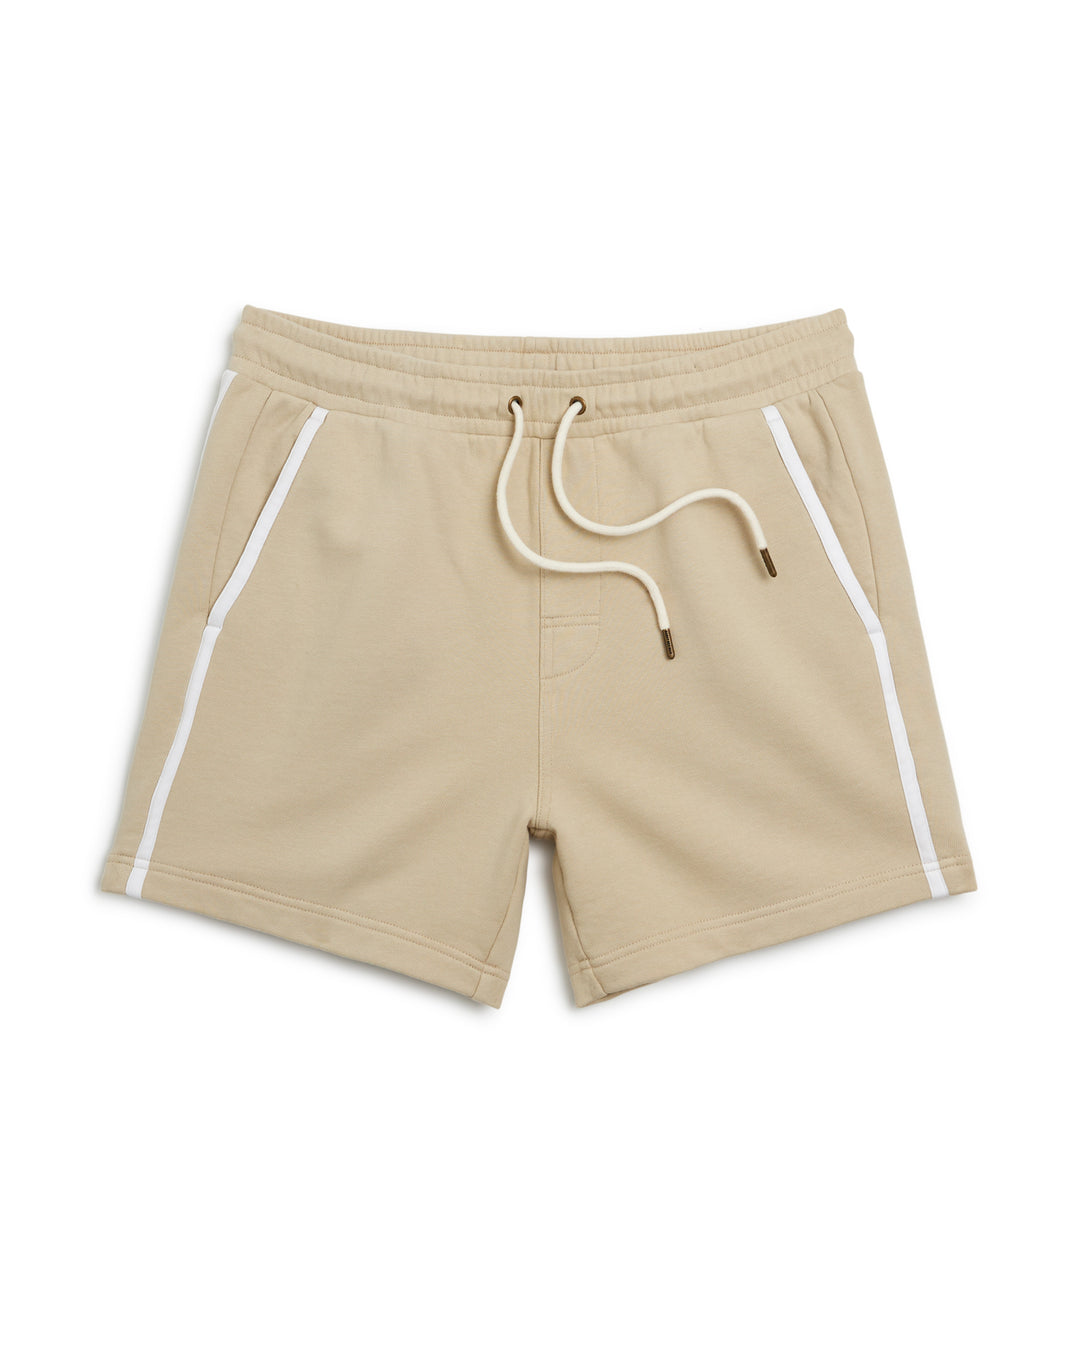 The Dandy Del Mar Marseille Short - Ginger swim shorts.